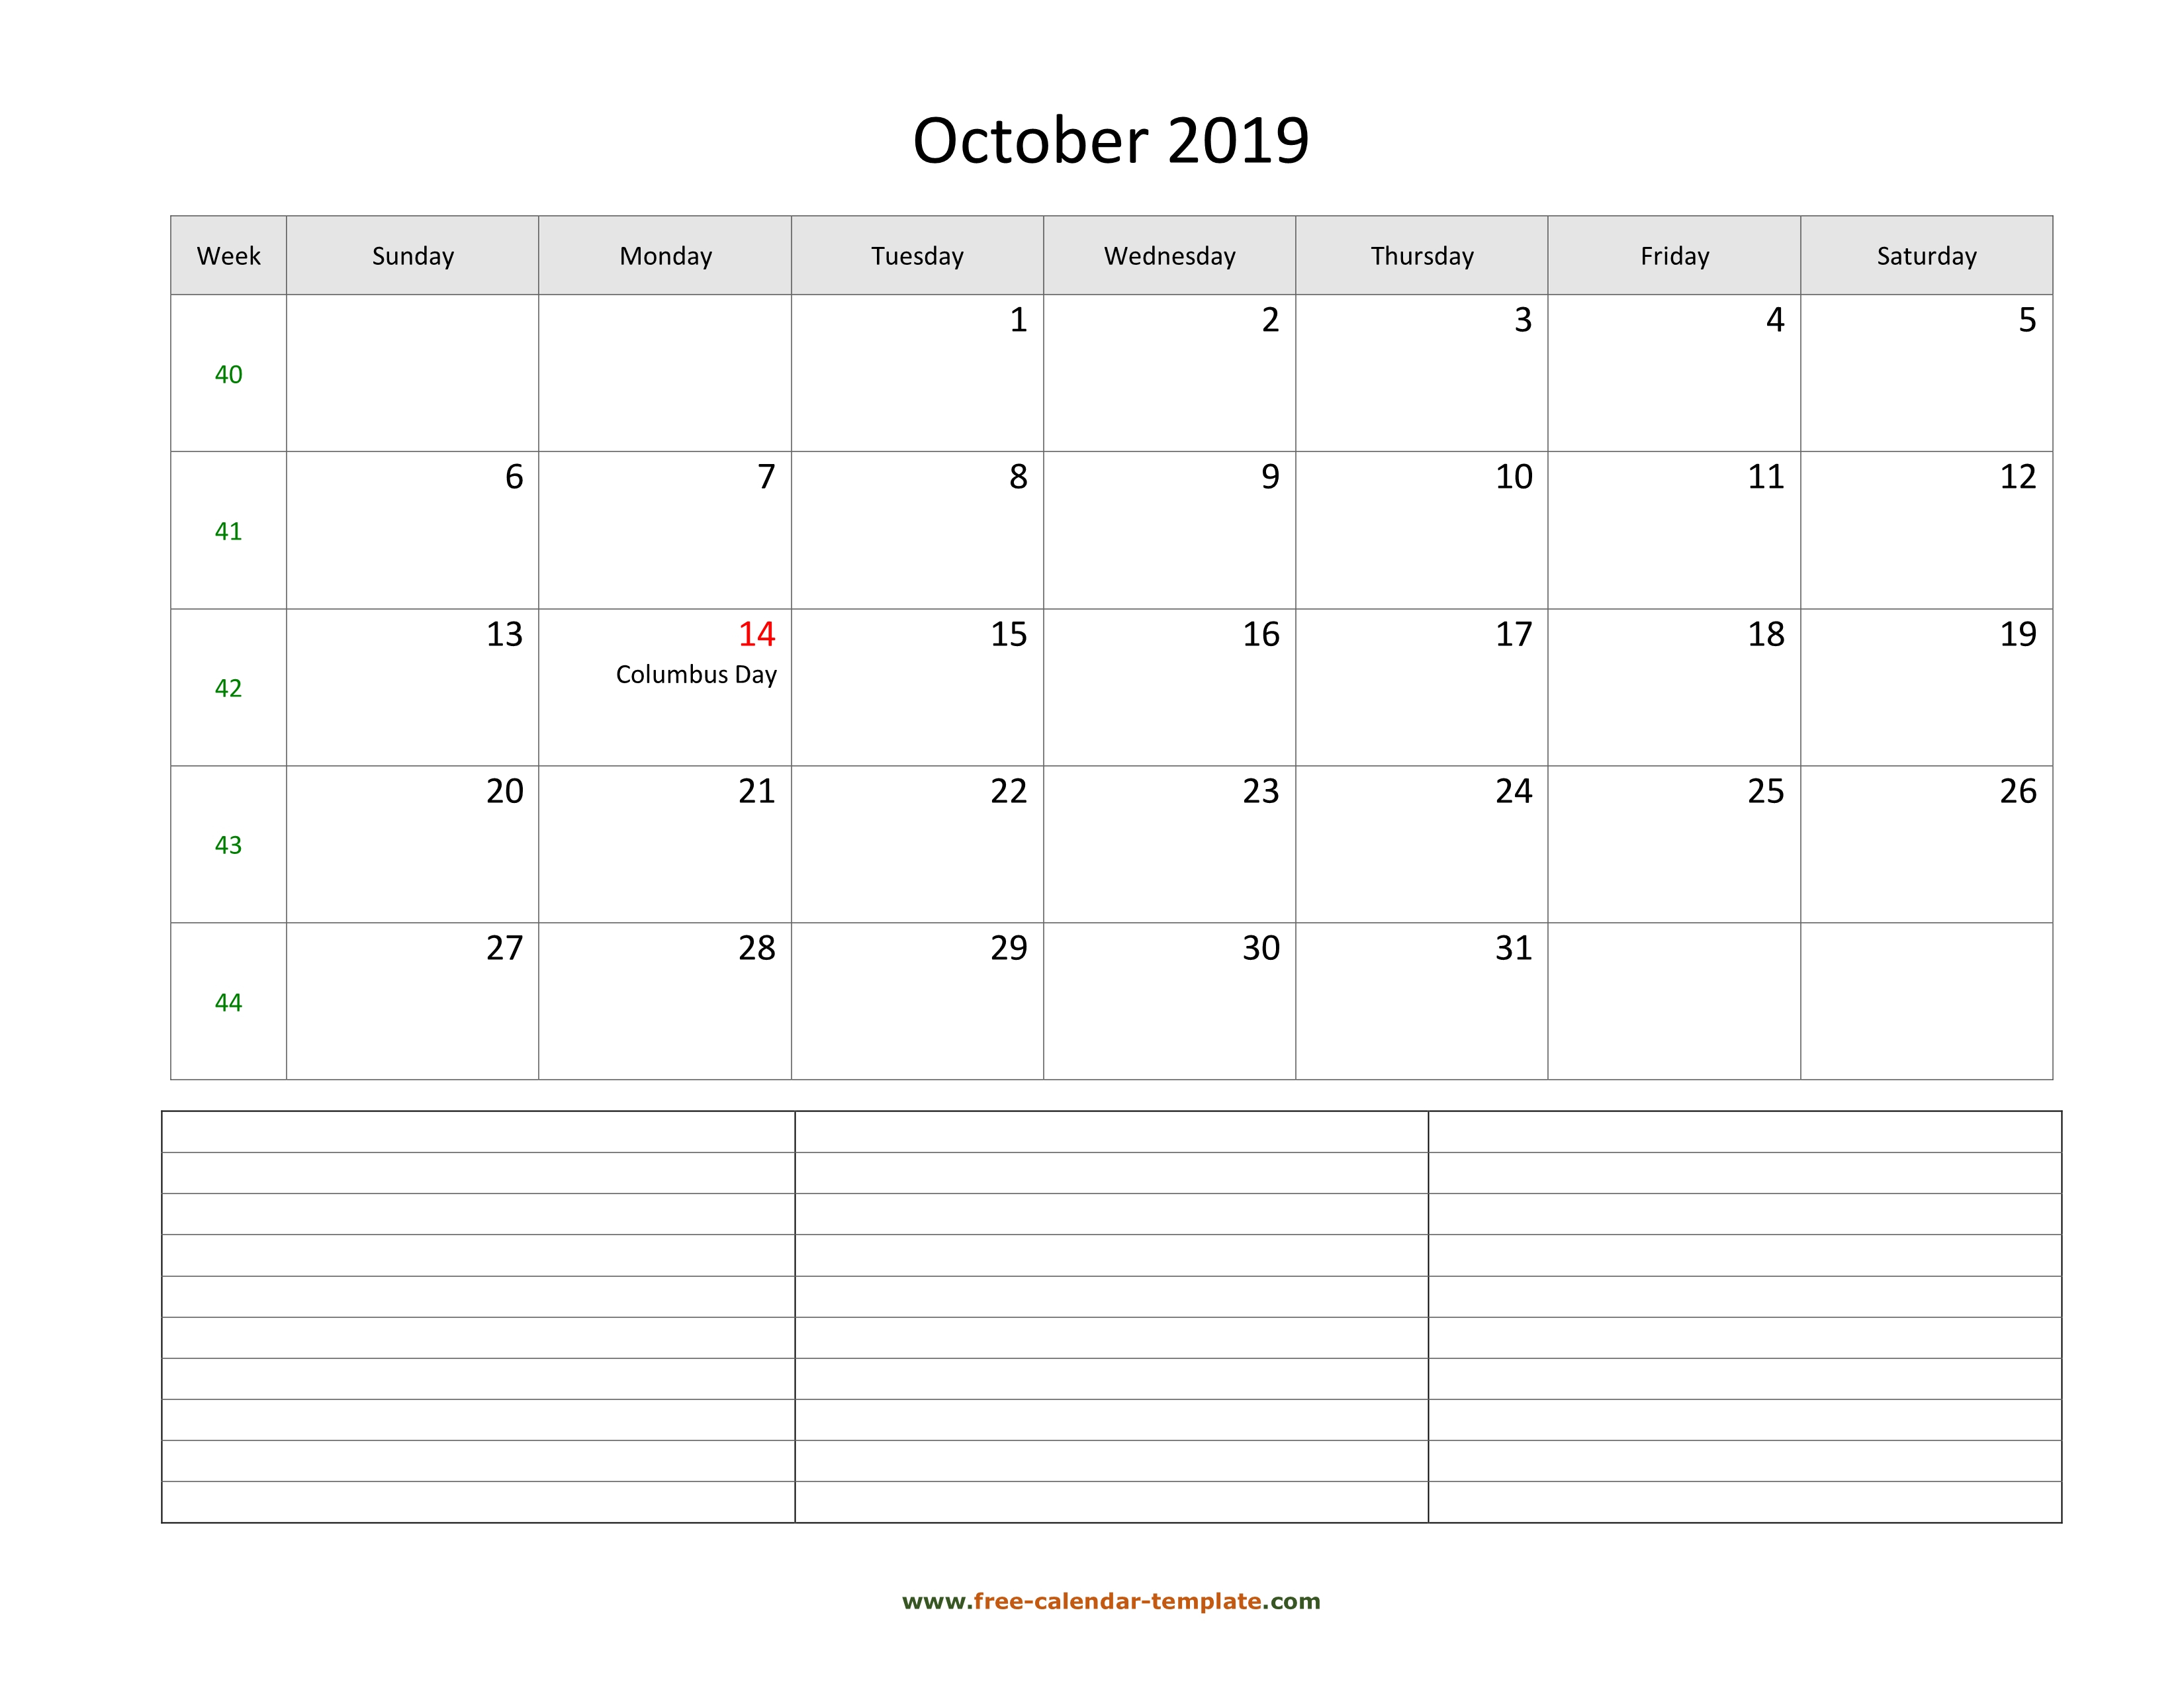 October 2019 Free Calendar Tempplate | Free-Calendar